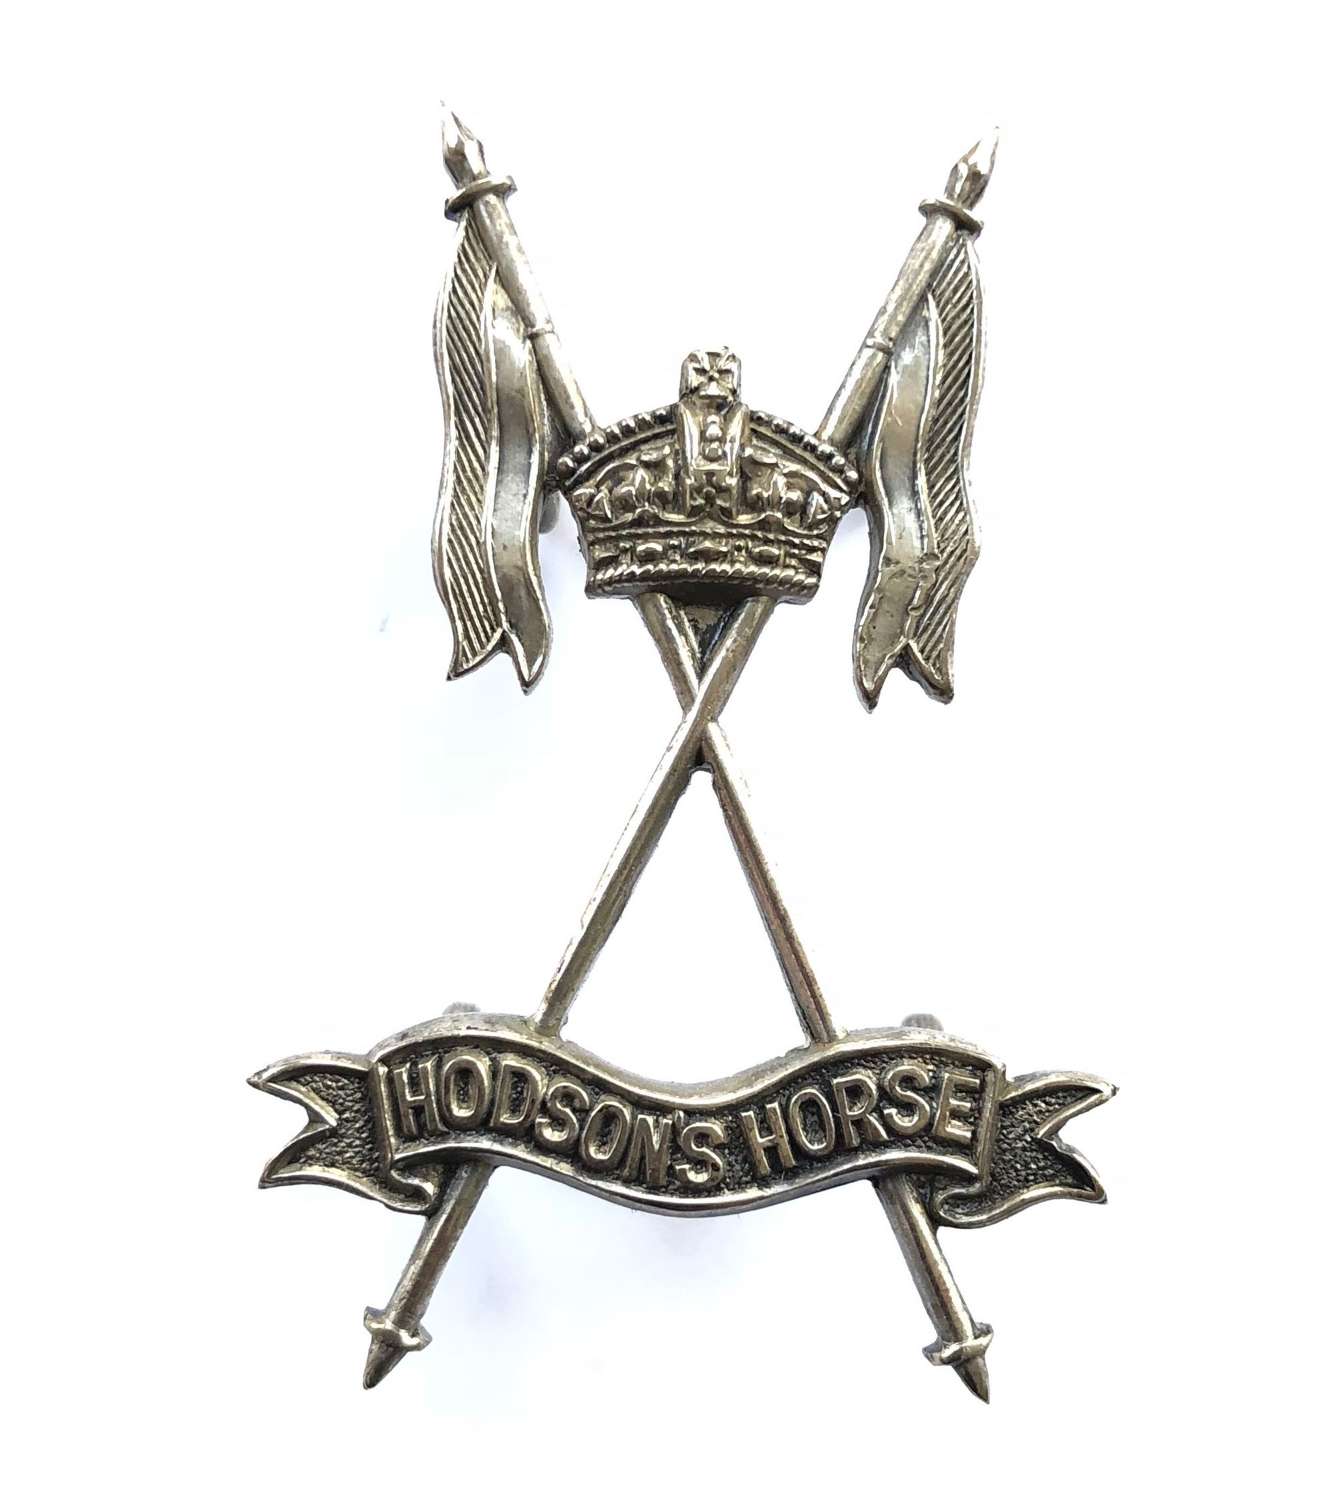 Hodson’s Horse (4th DCO’s Own Lancers) Officer’s post 1922 cap b